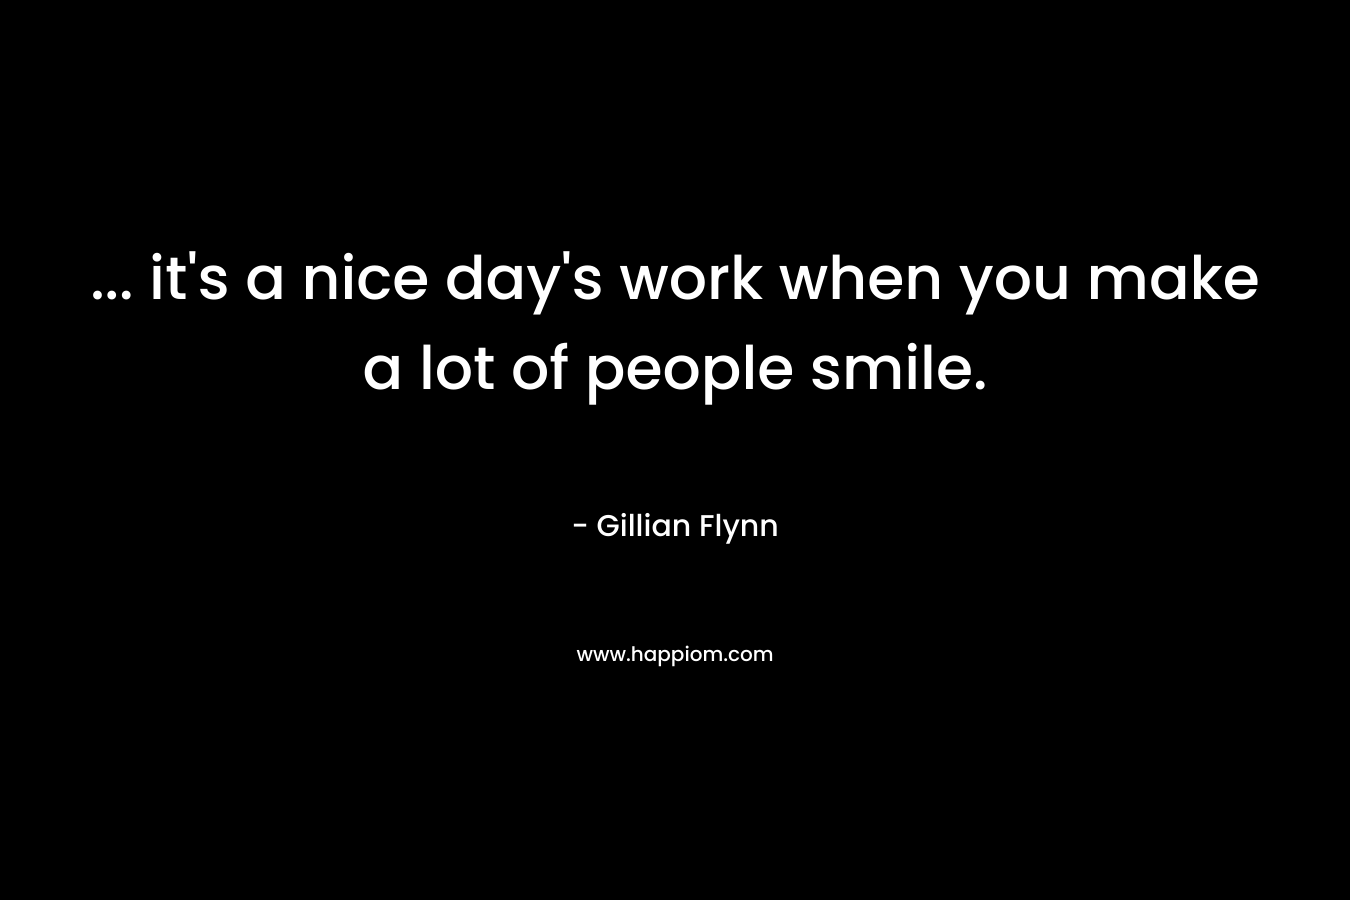 ... it's a nice day's work when you make a lot of people smile.